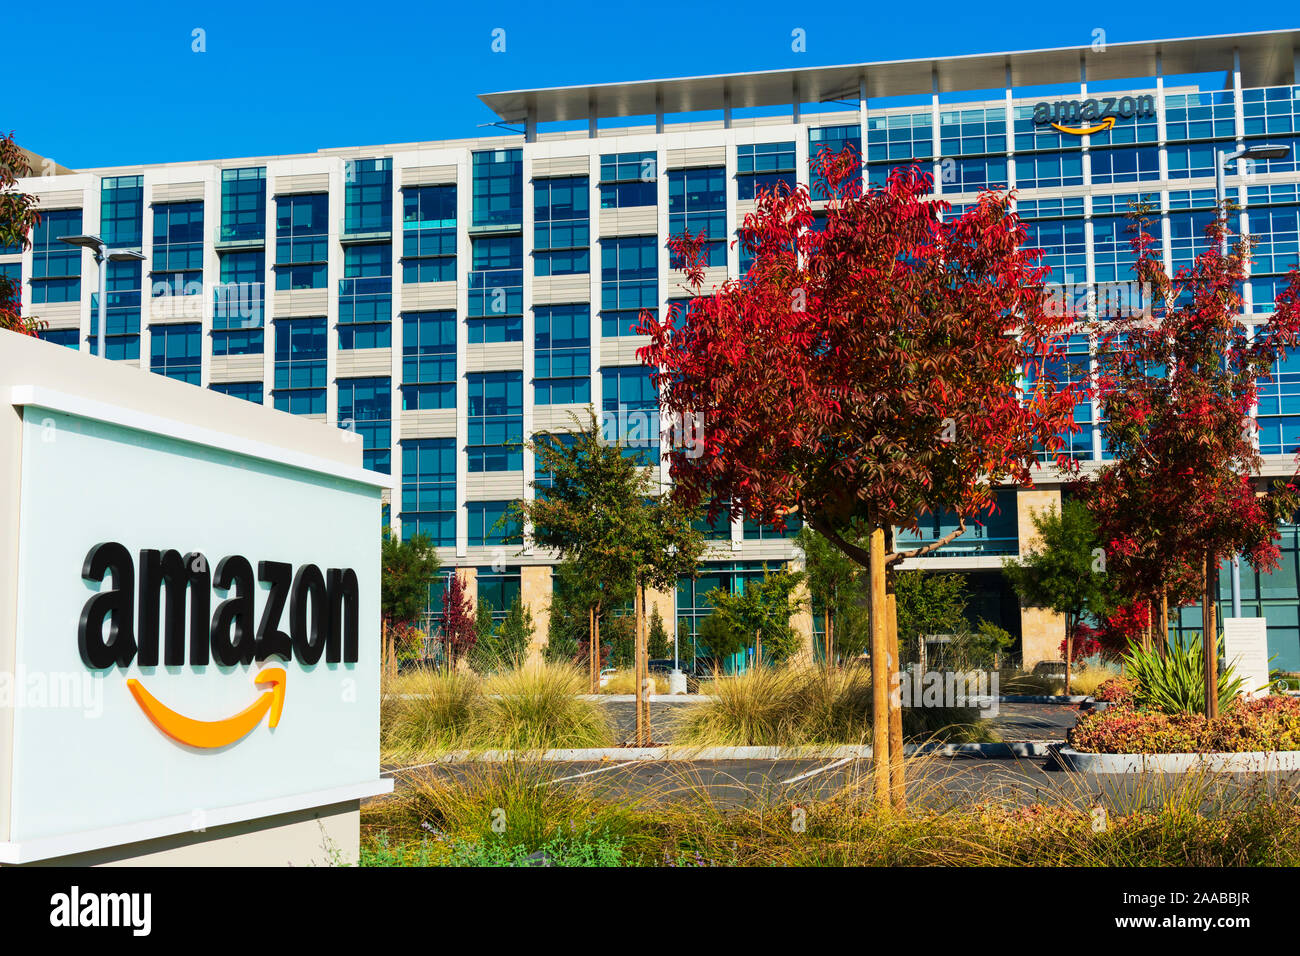 Amazon logo at Amazon.com campus in Silicon Valley - Sunnyvale, California, USA - 2019 Stock Photo